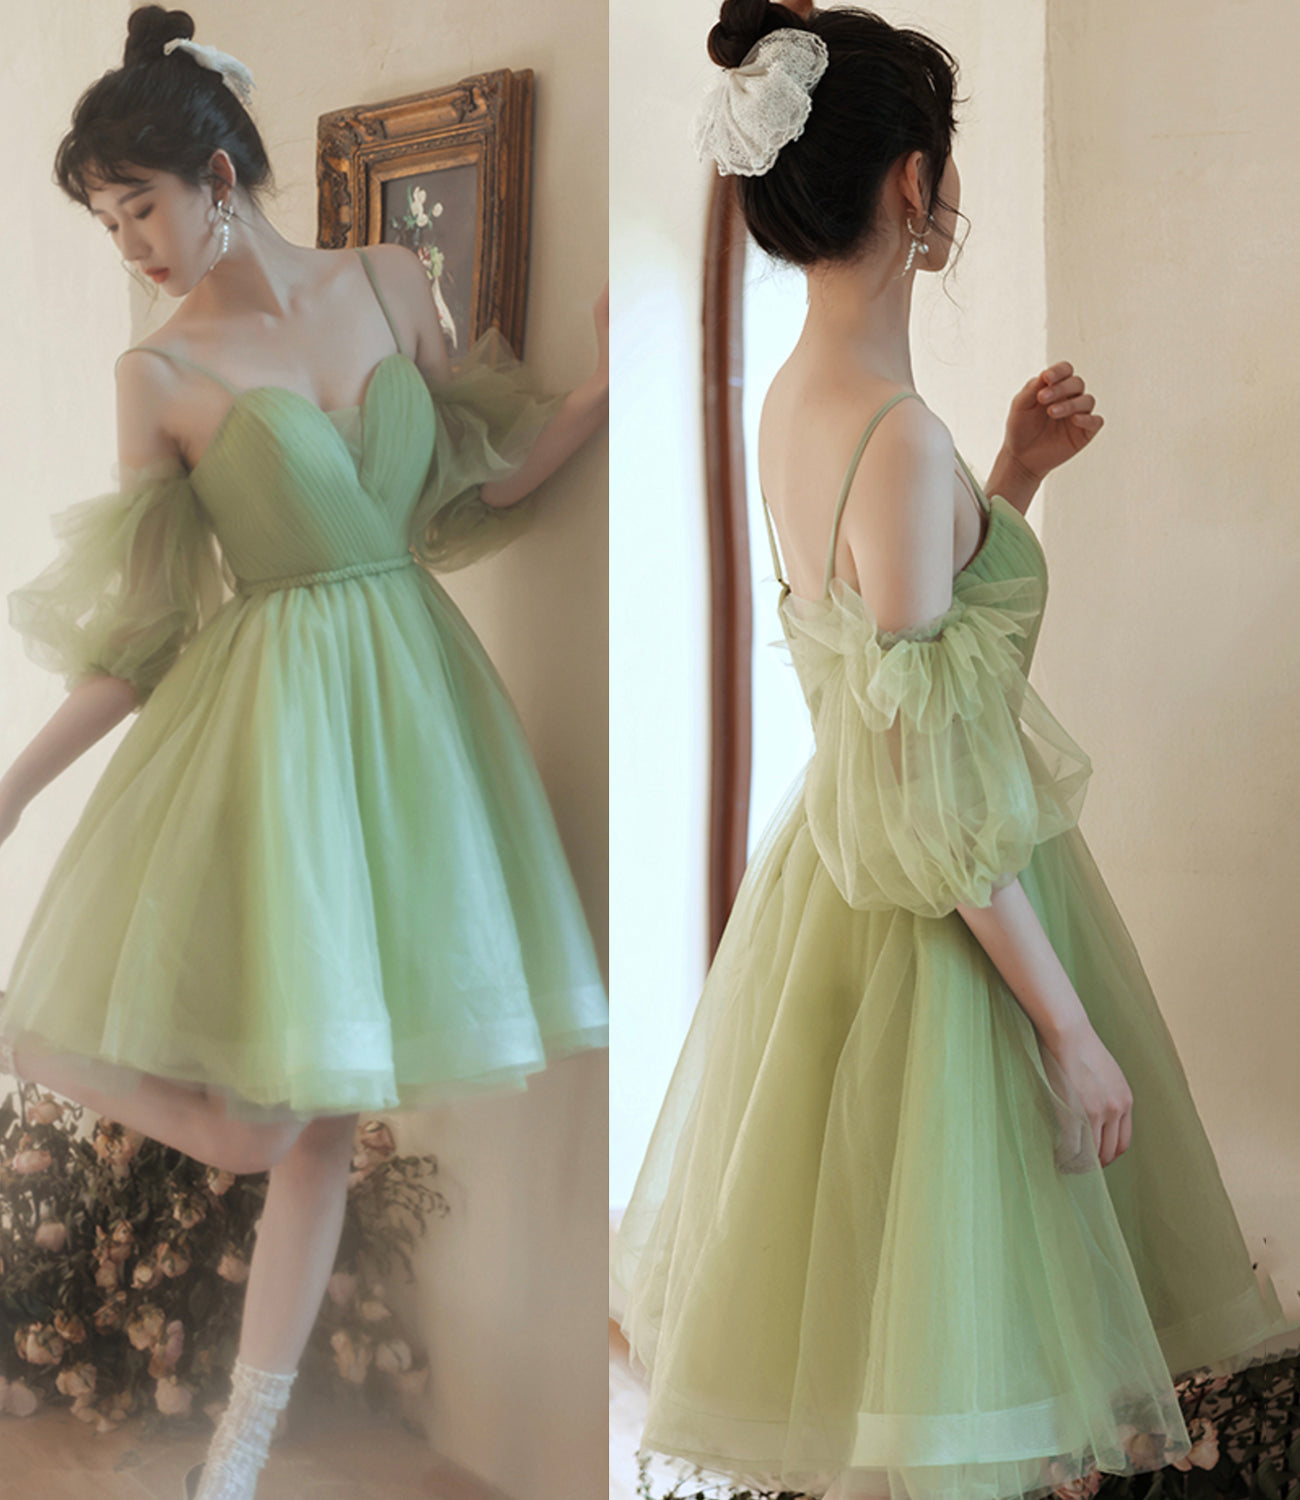 Green Tulle Short Cocktail Dress Homecoming Dress short prom dress nv78